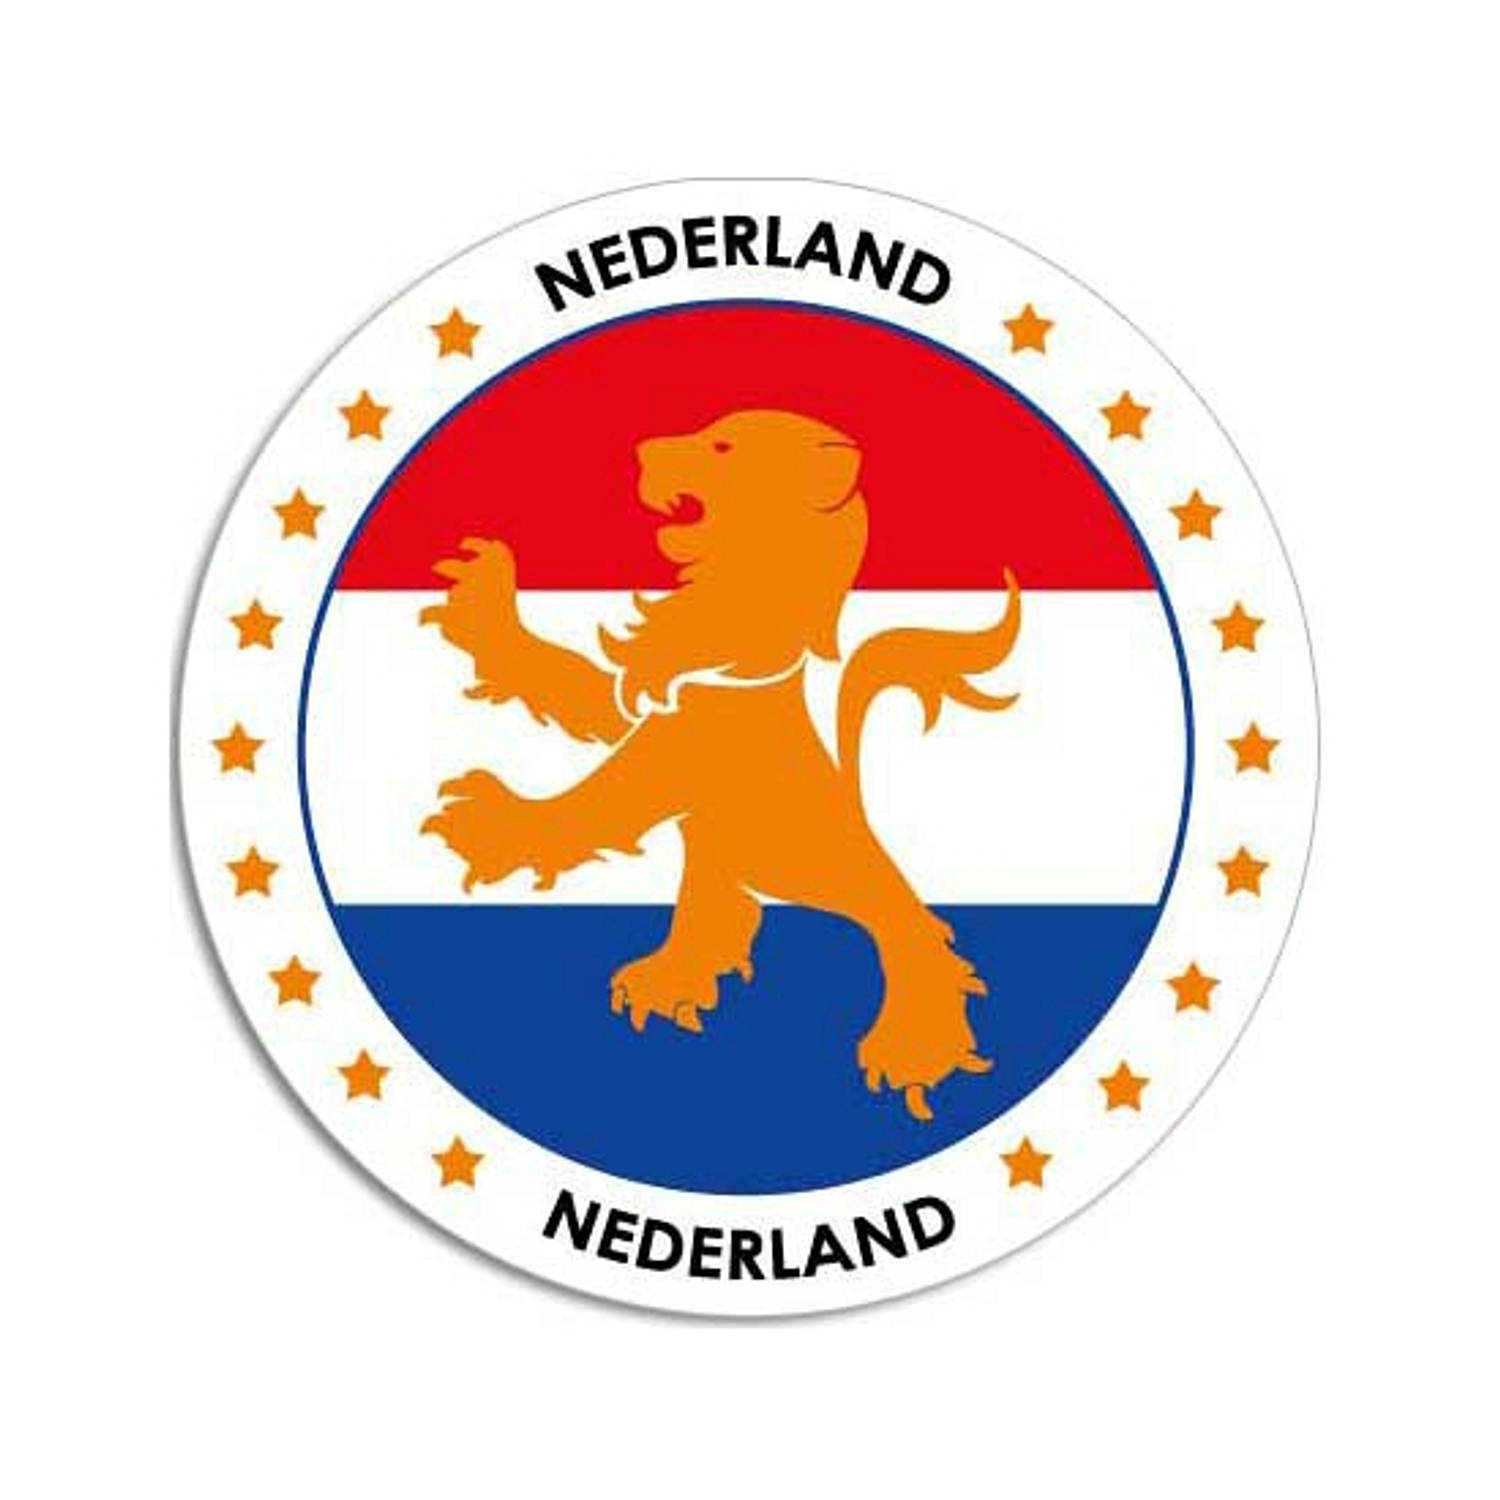 5x Stuks Nederland Raamstickers Rond 14 Cm Holland Raam Decoratie Stickerss